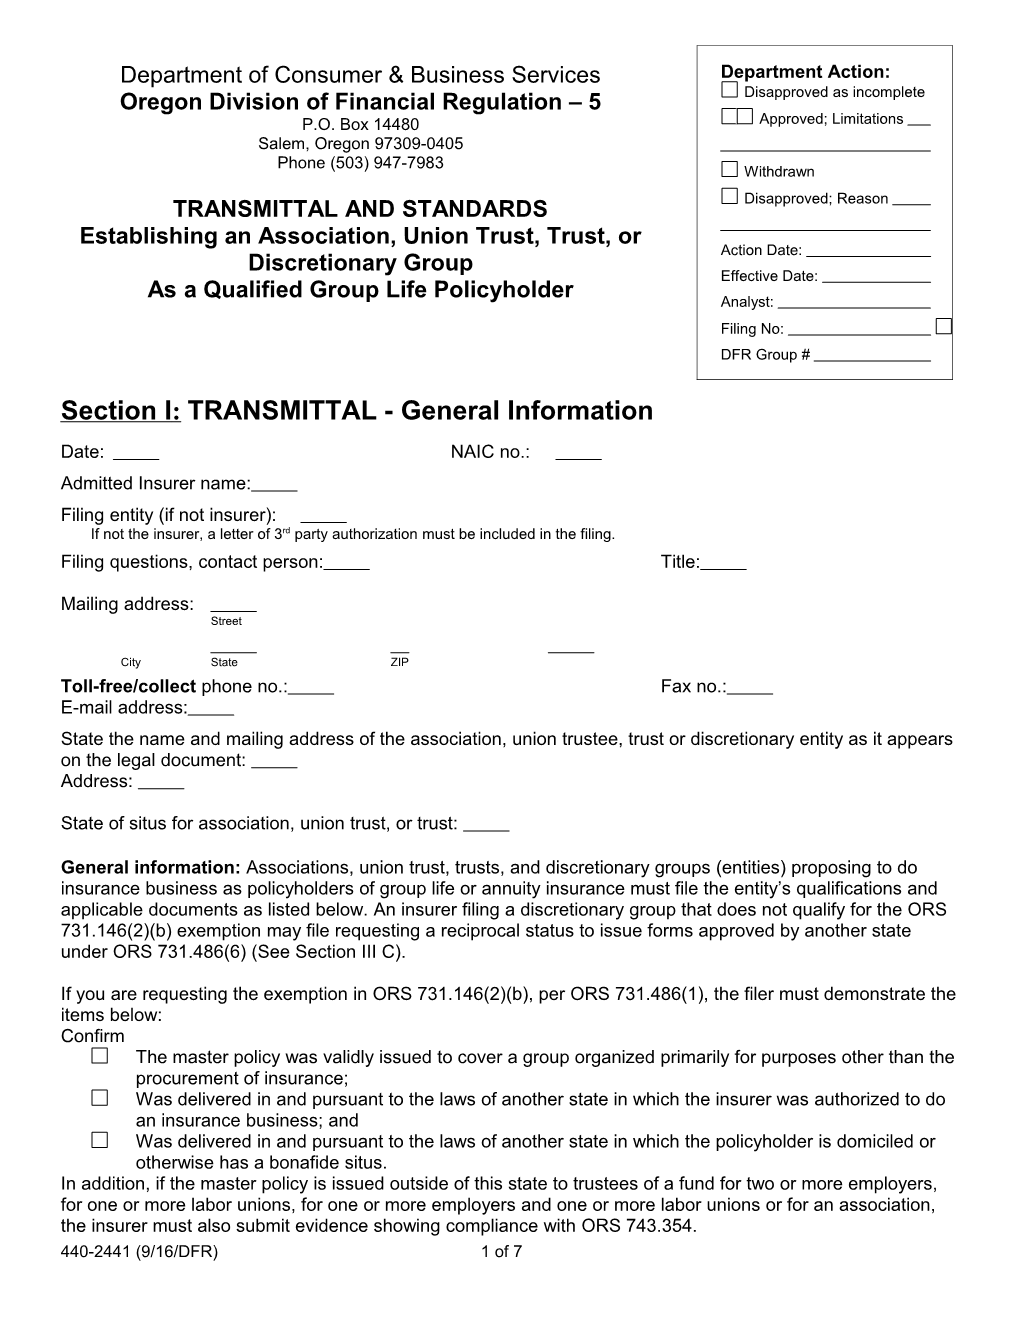 Form 2441, Transmittal and Standards Establishing an Association, Union Trust, Trust, Or